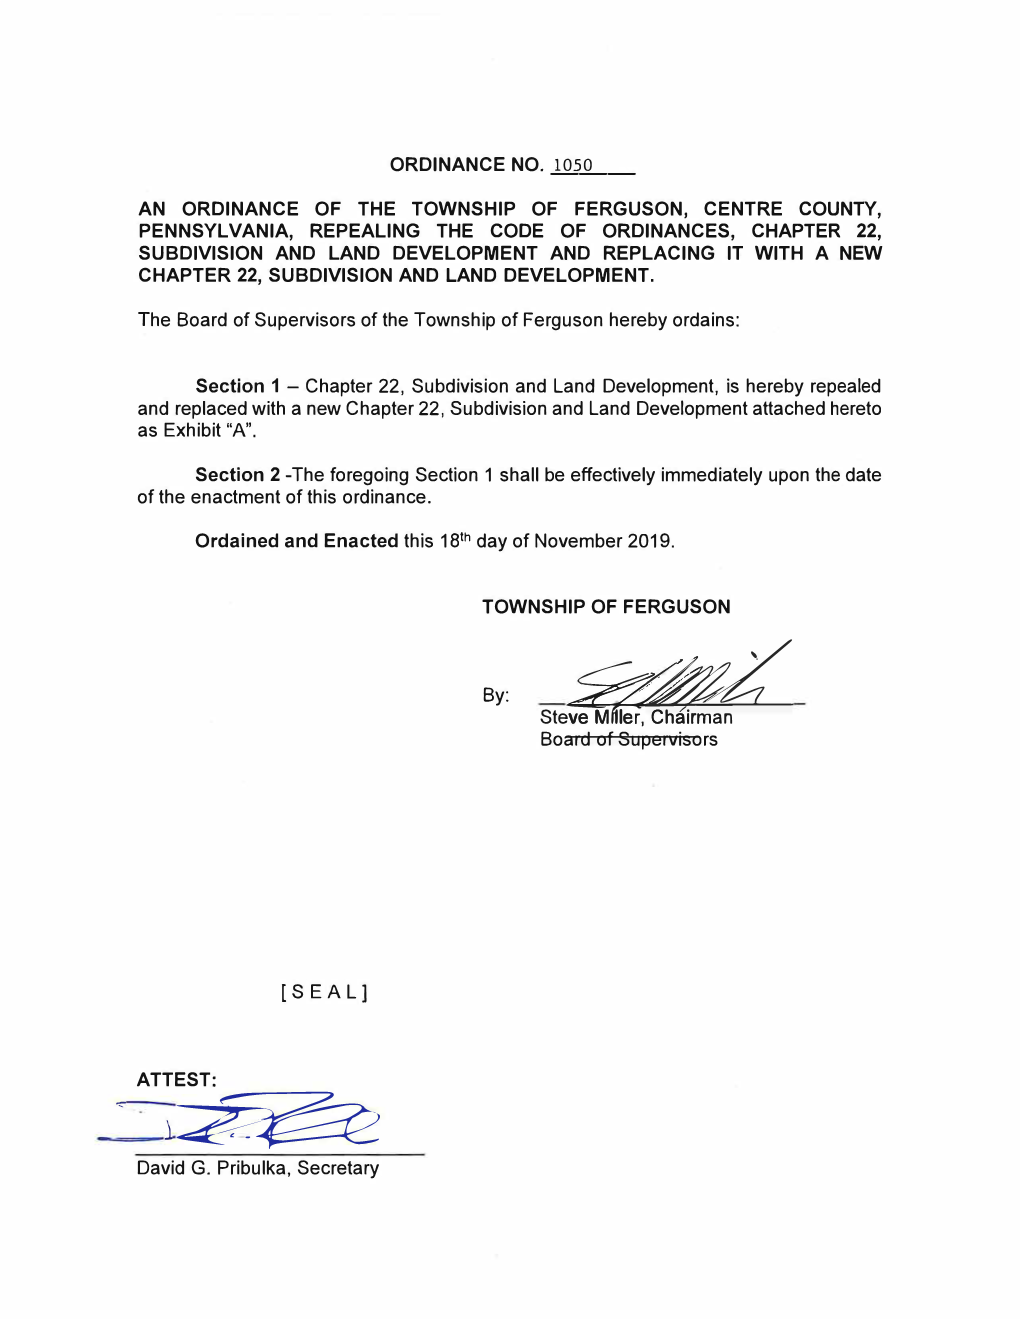 Ordinance No. 1050 an Ordinance of the Township of Ferguson, Centre County, Pennsylvania, Repealing the Code of Ordinances, Chap